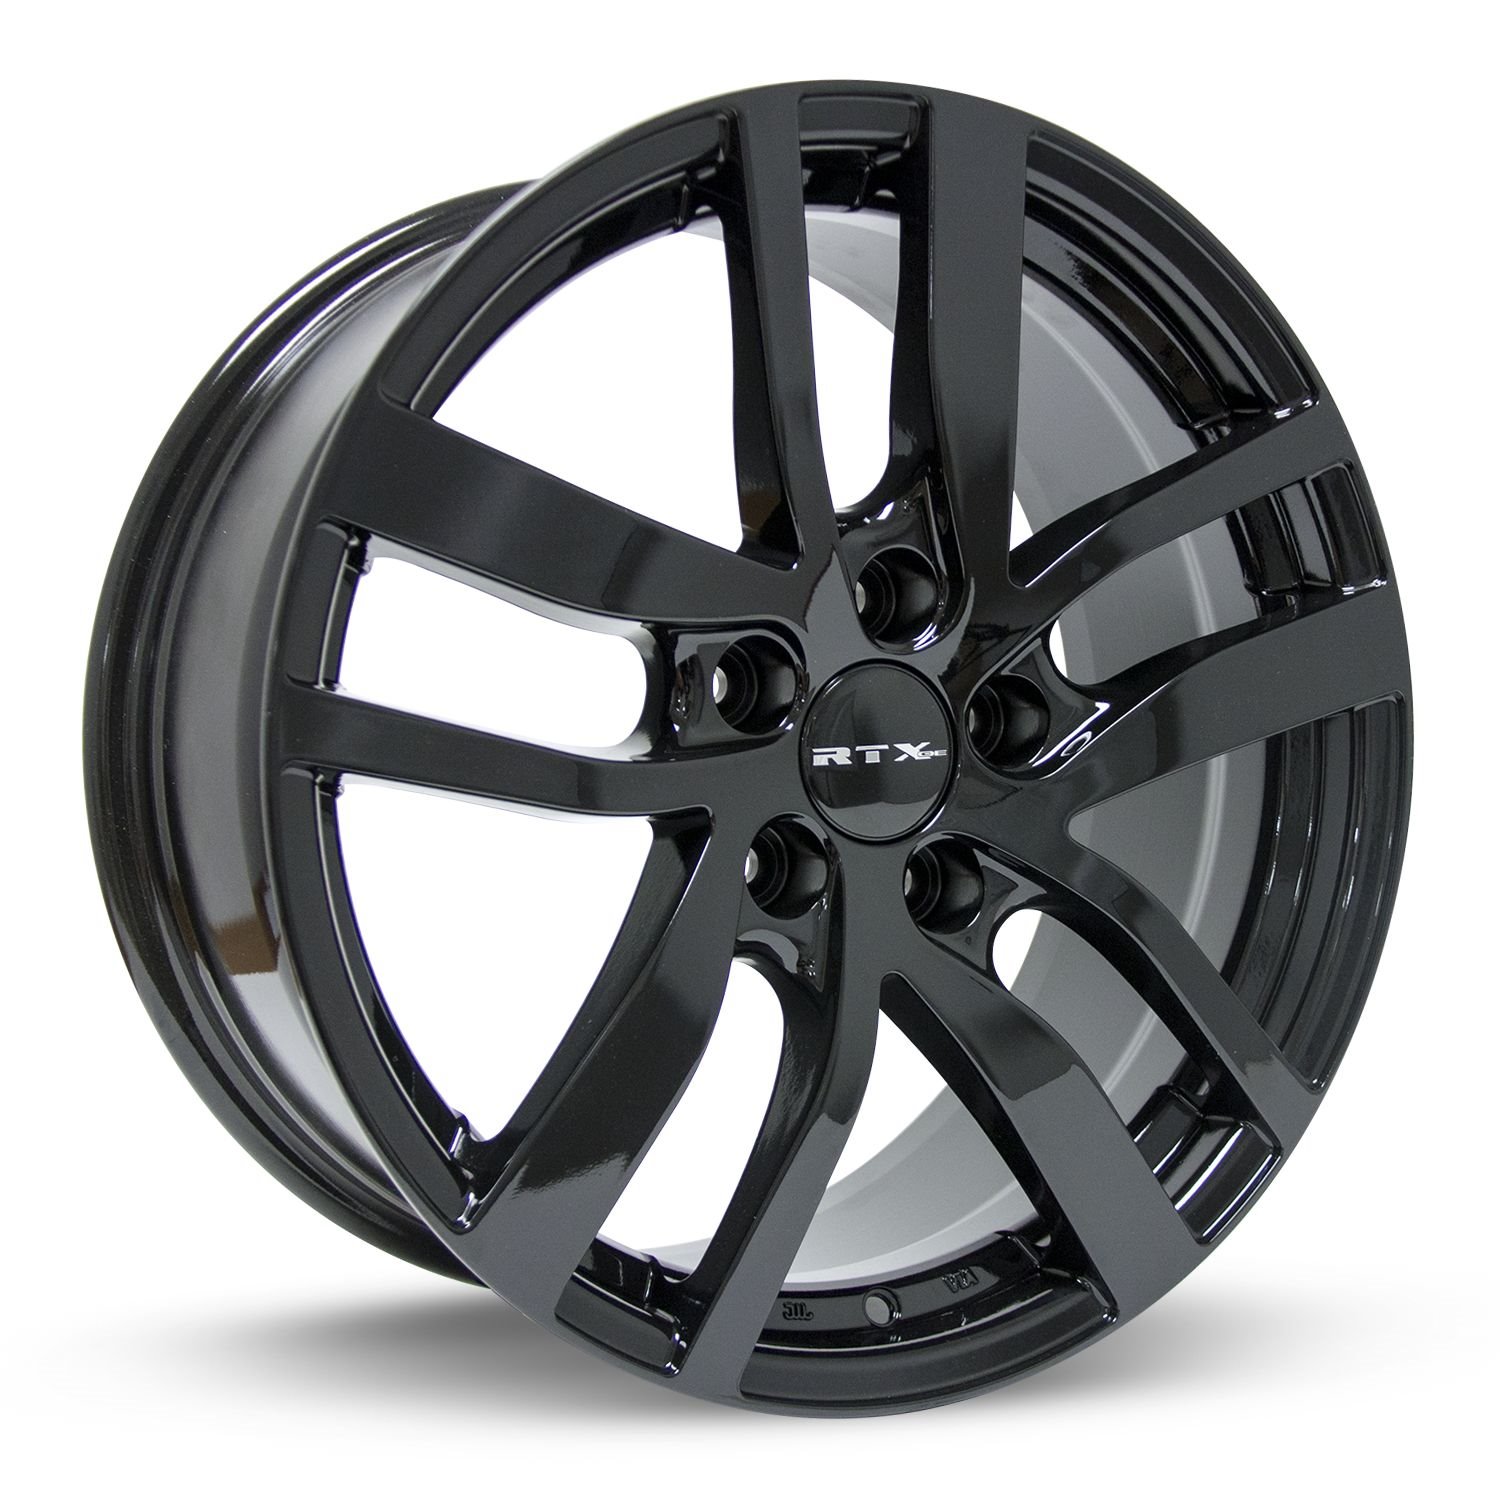 082227 OE-Series Pilot Wheel [Size: 18" x 8"] Gloss Black Finish